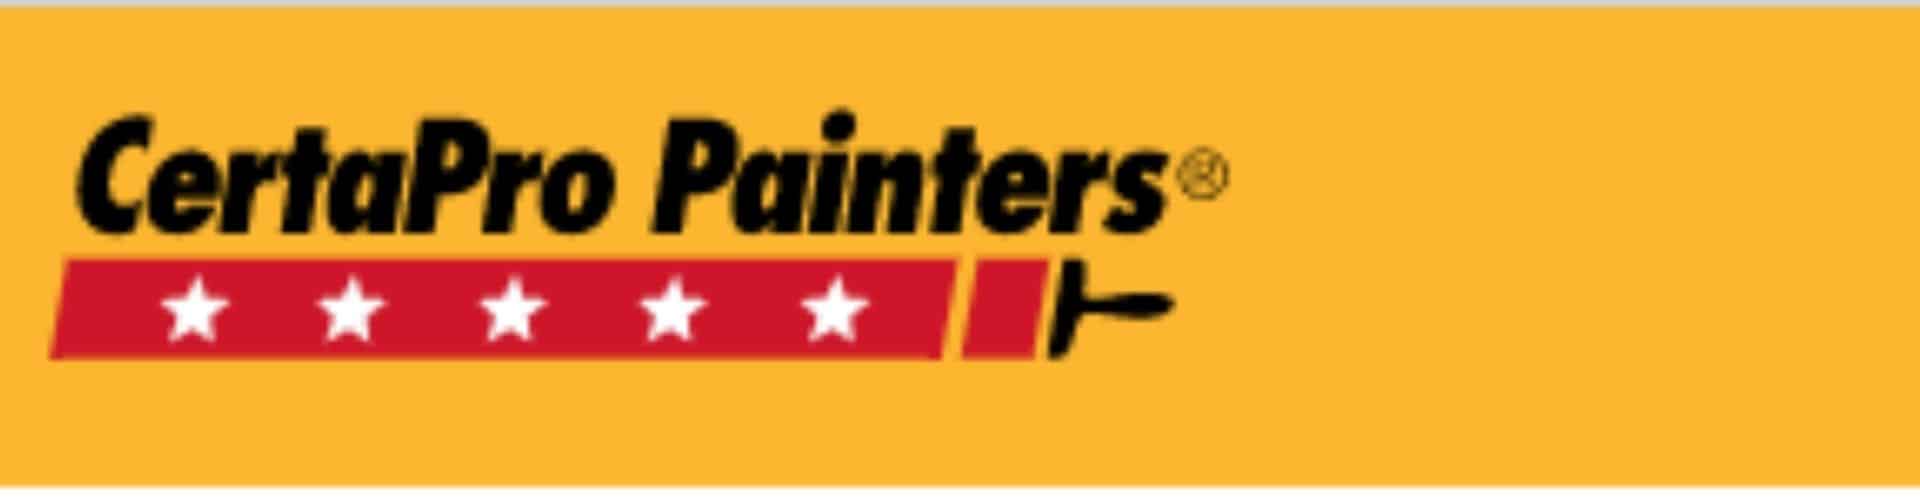 image of certa pro painters logo